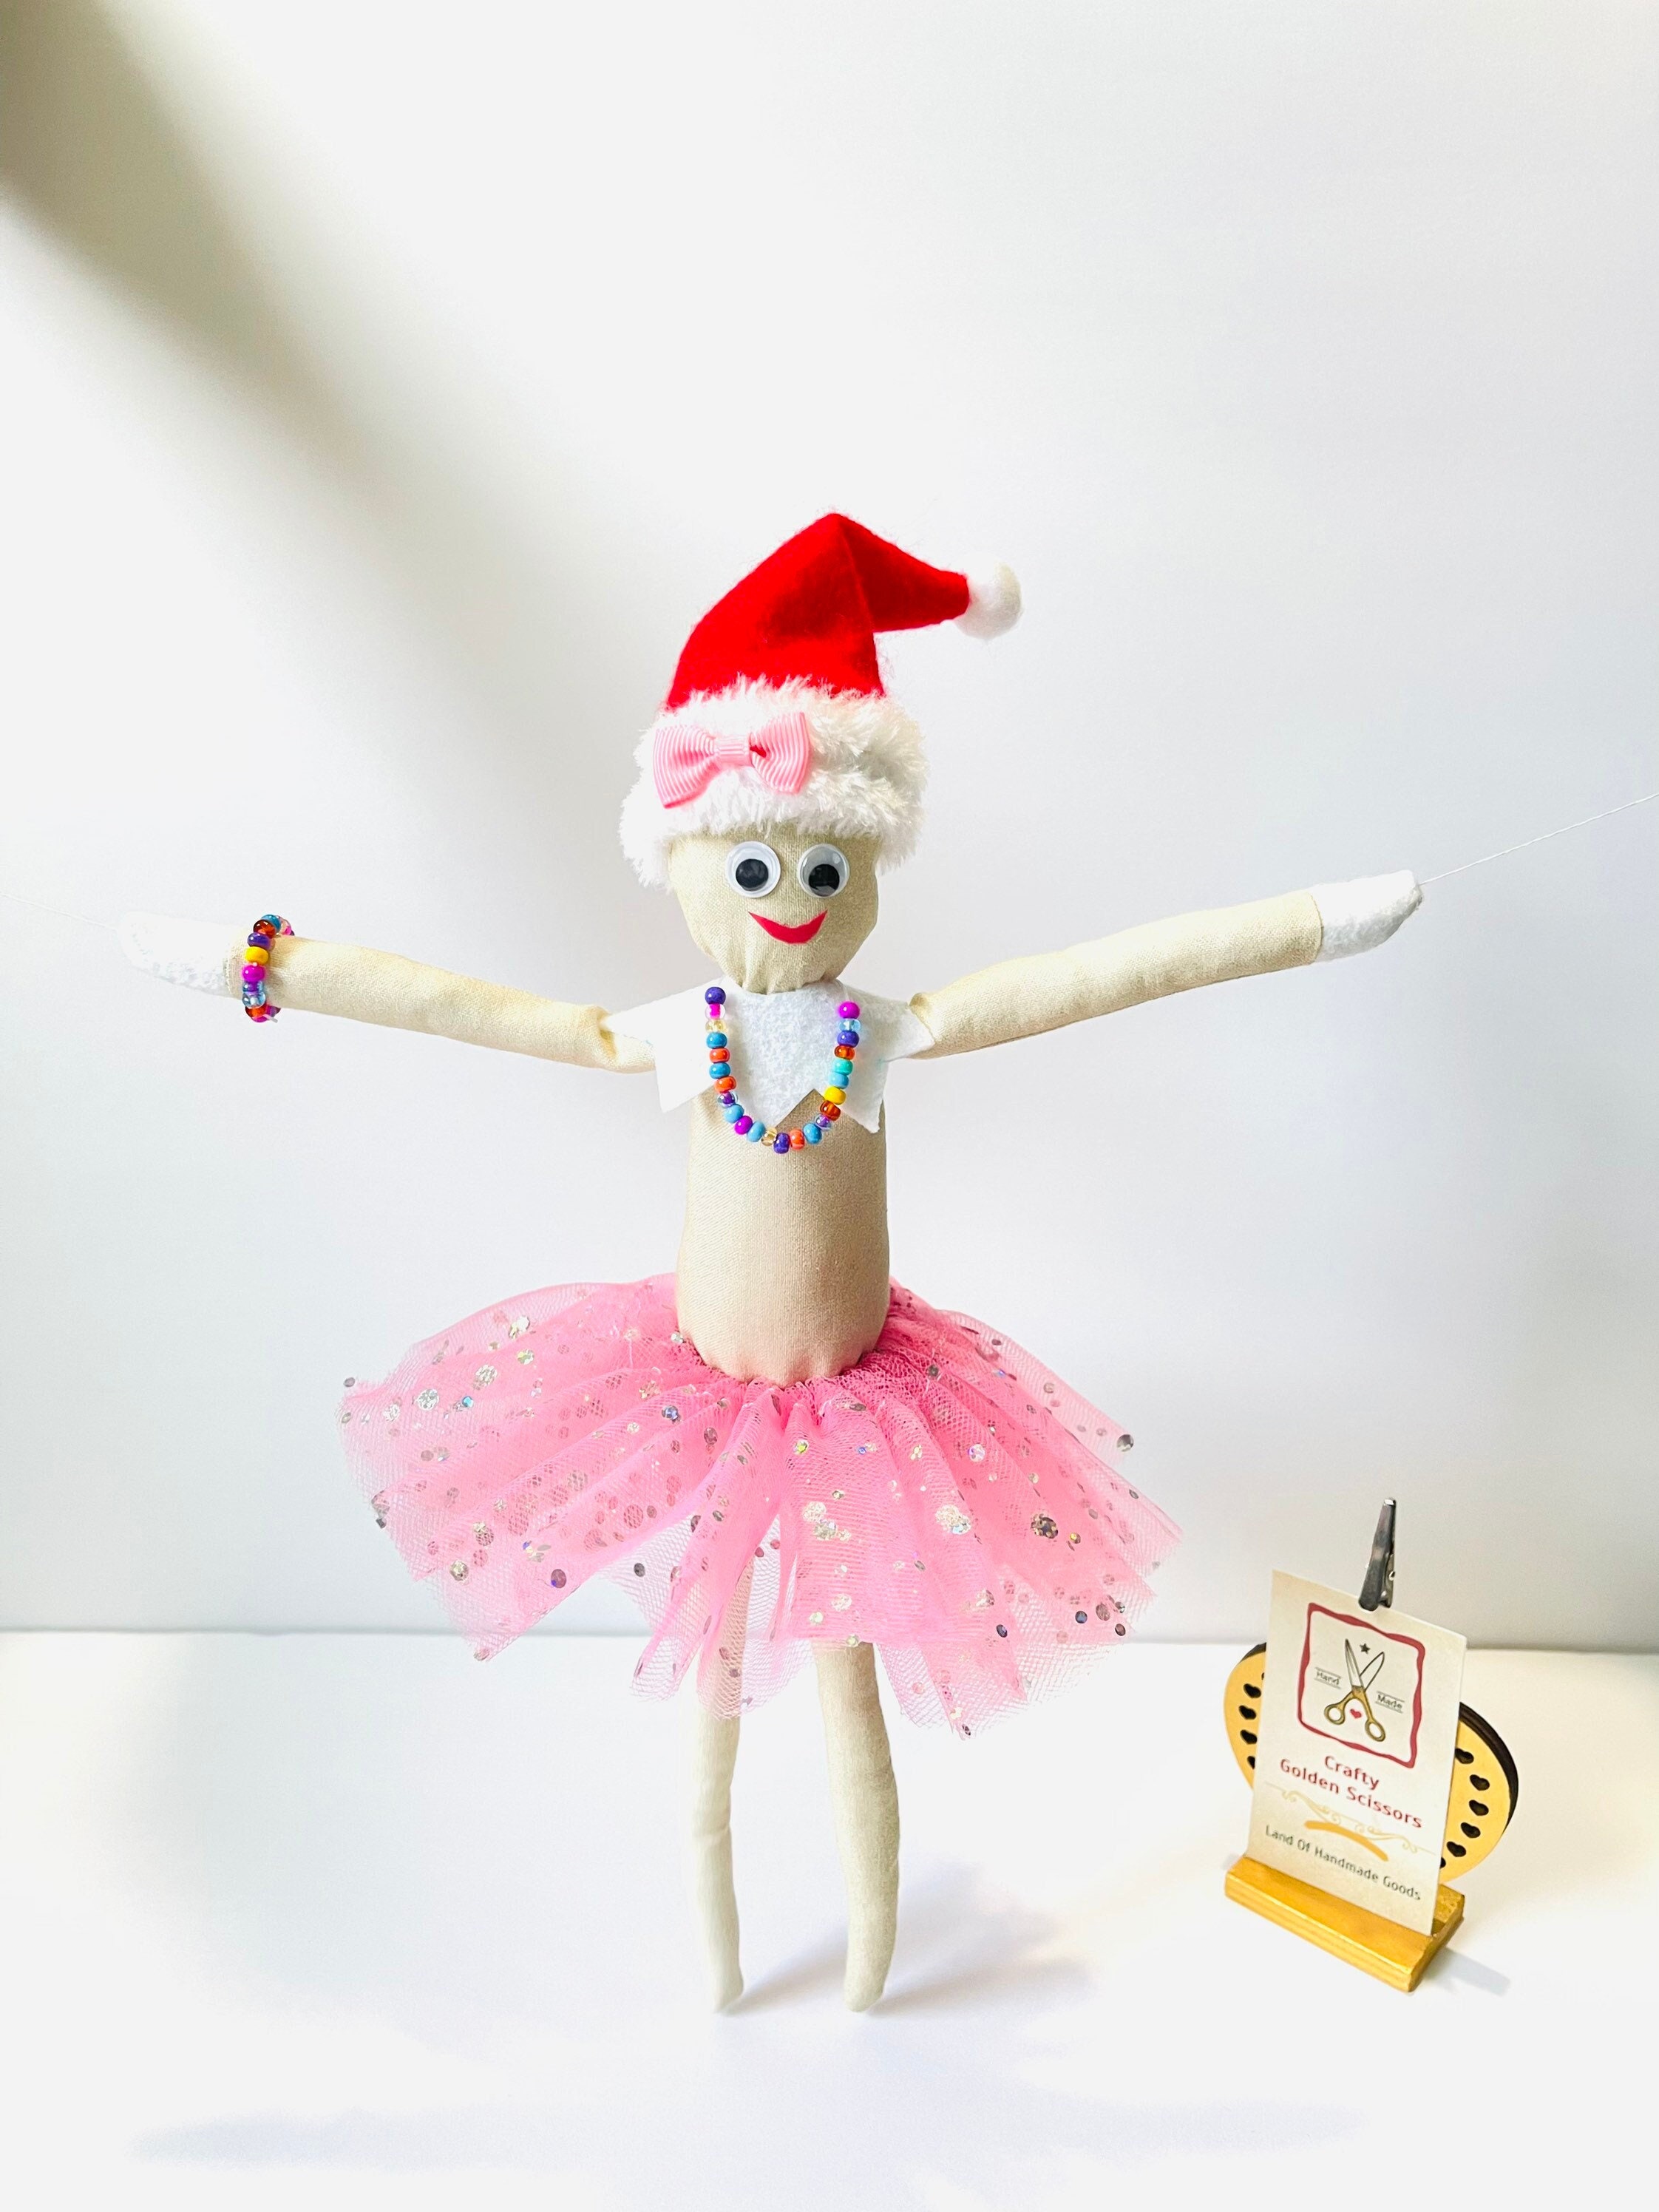 Barbie Ballet Ballerina Doll With 2 Tutu's 2002 Mattel 56990 for sale